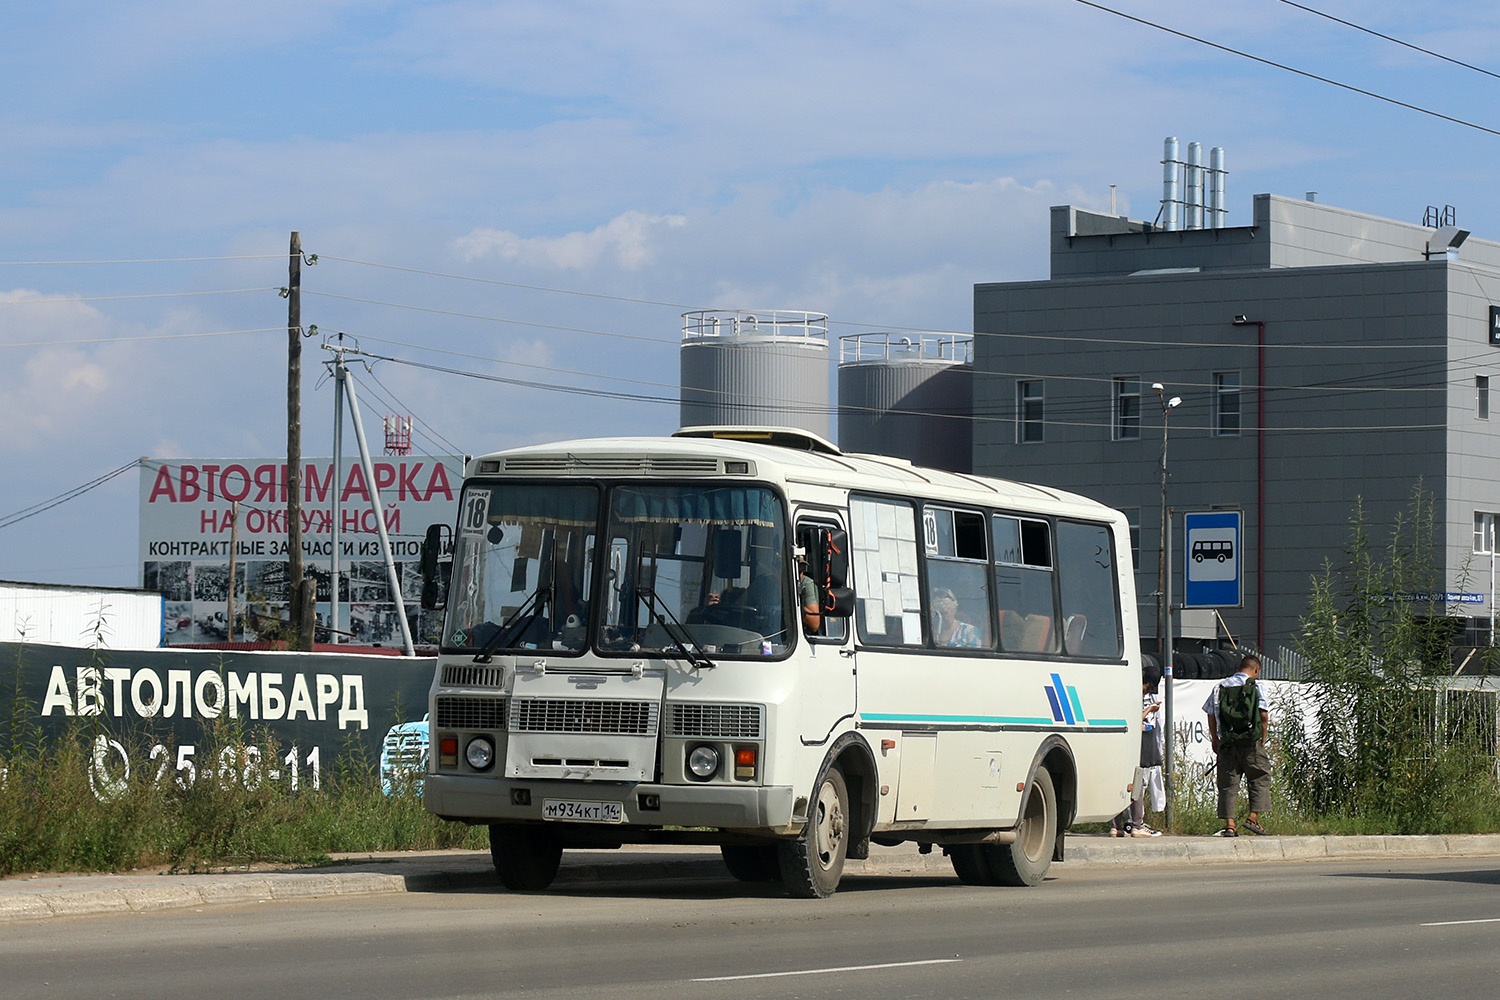 Sacha (Jakutsko), PAZ-32053 č. М 934 КТ 14